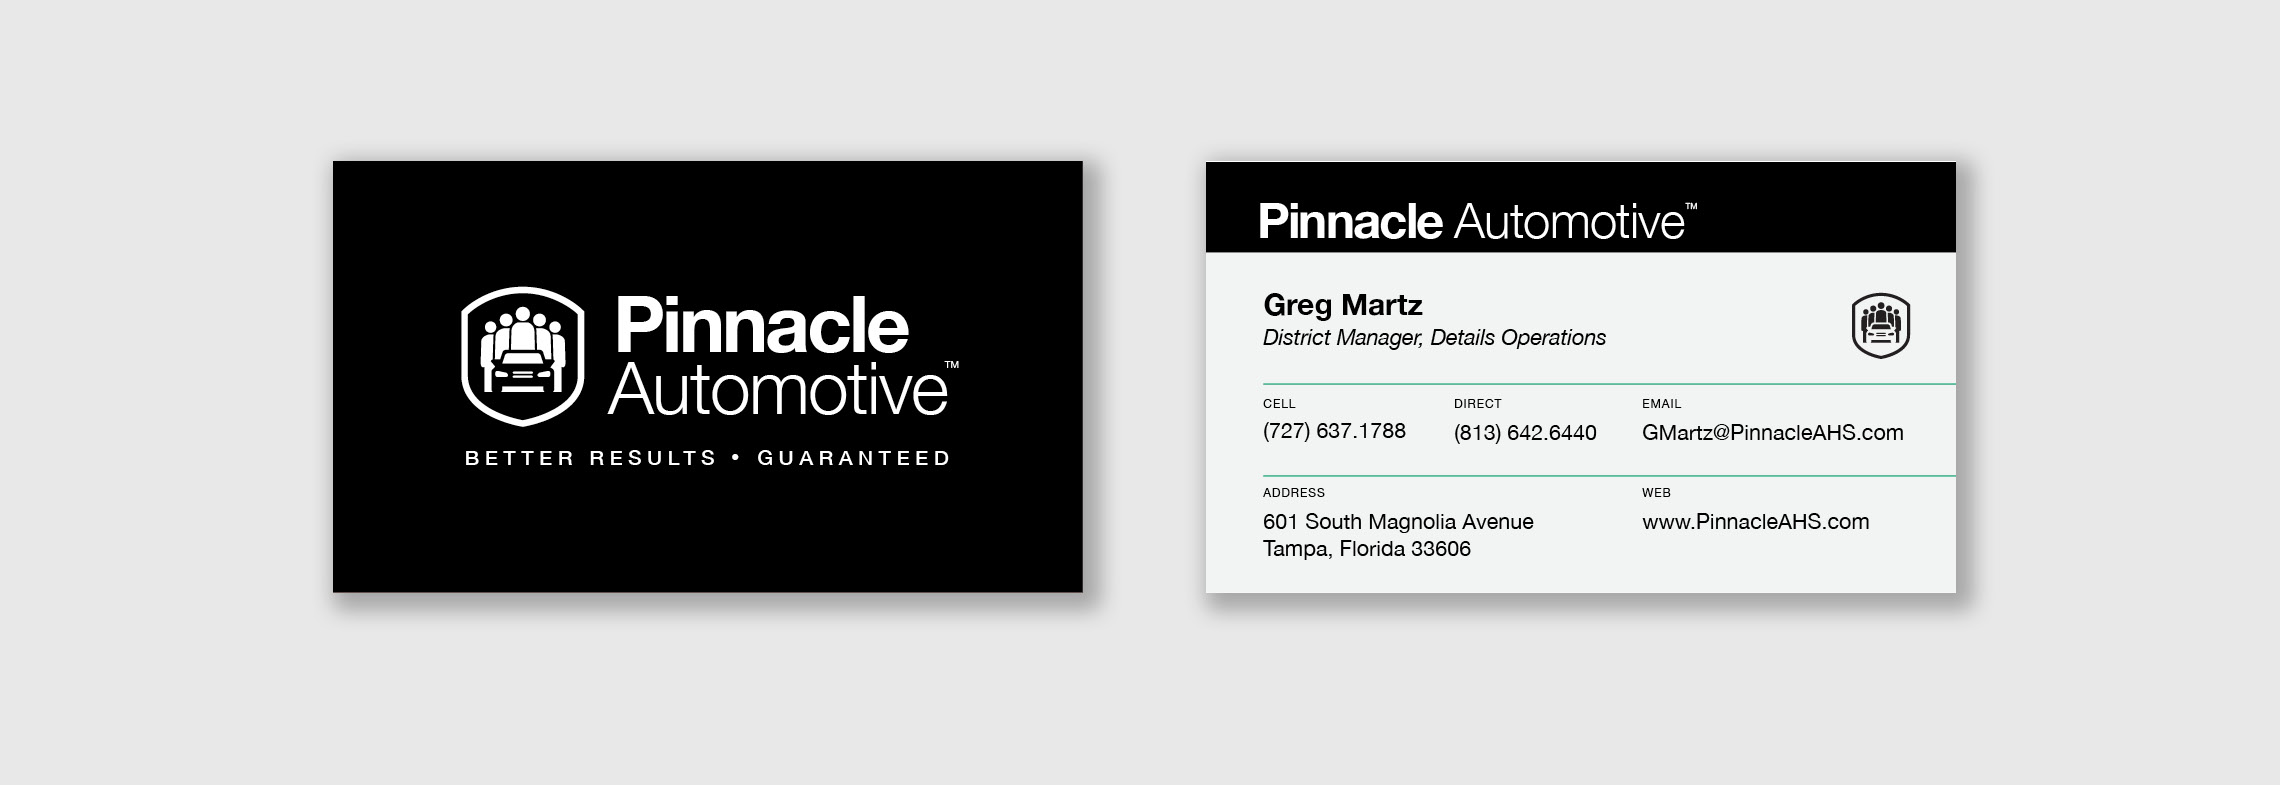 Pinnacle Automotive business card